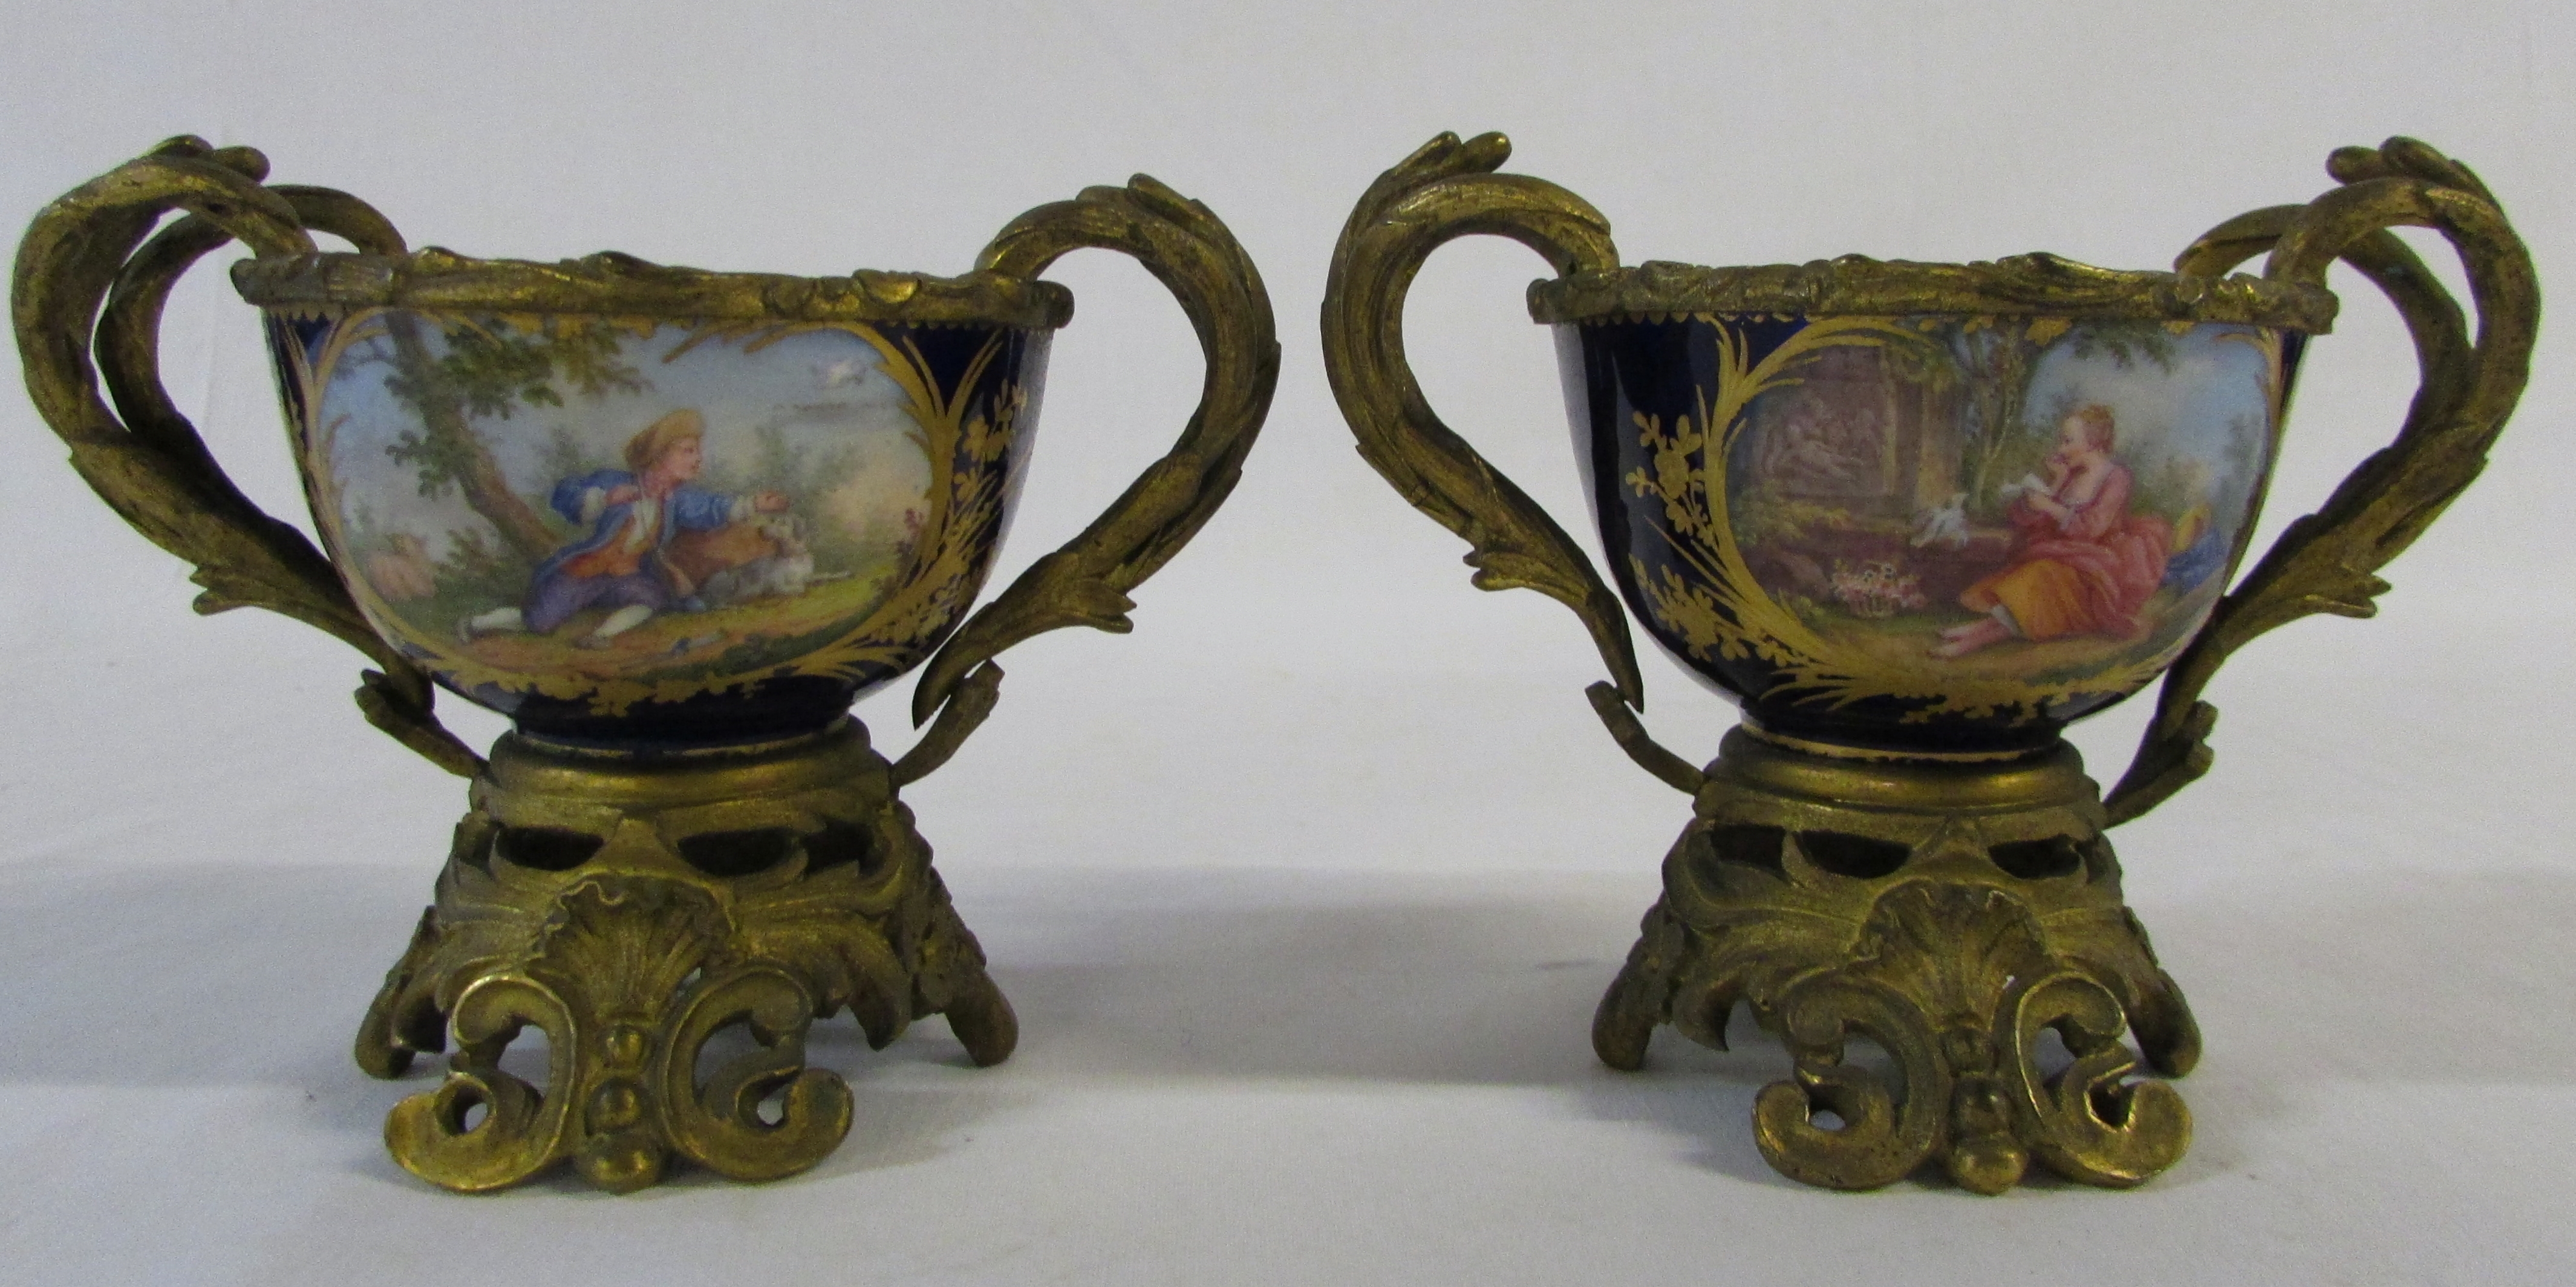 Pair of ormolu mounted Sevres porcelain vases H 9.